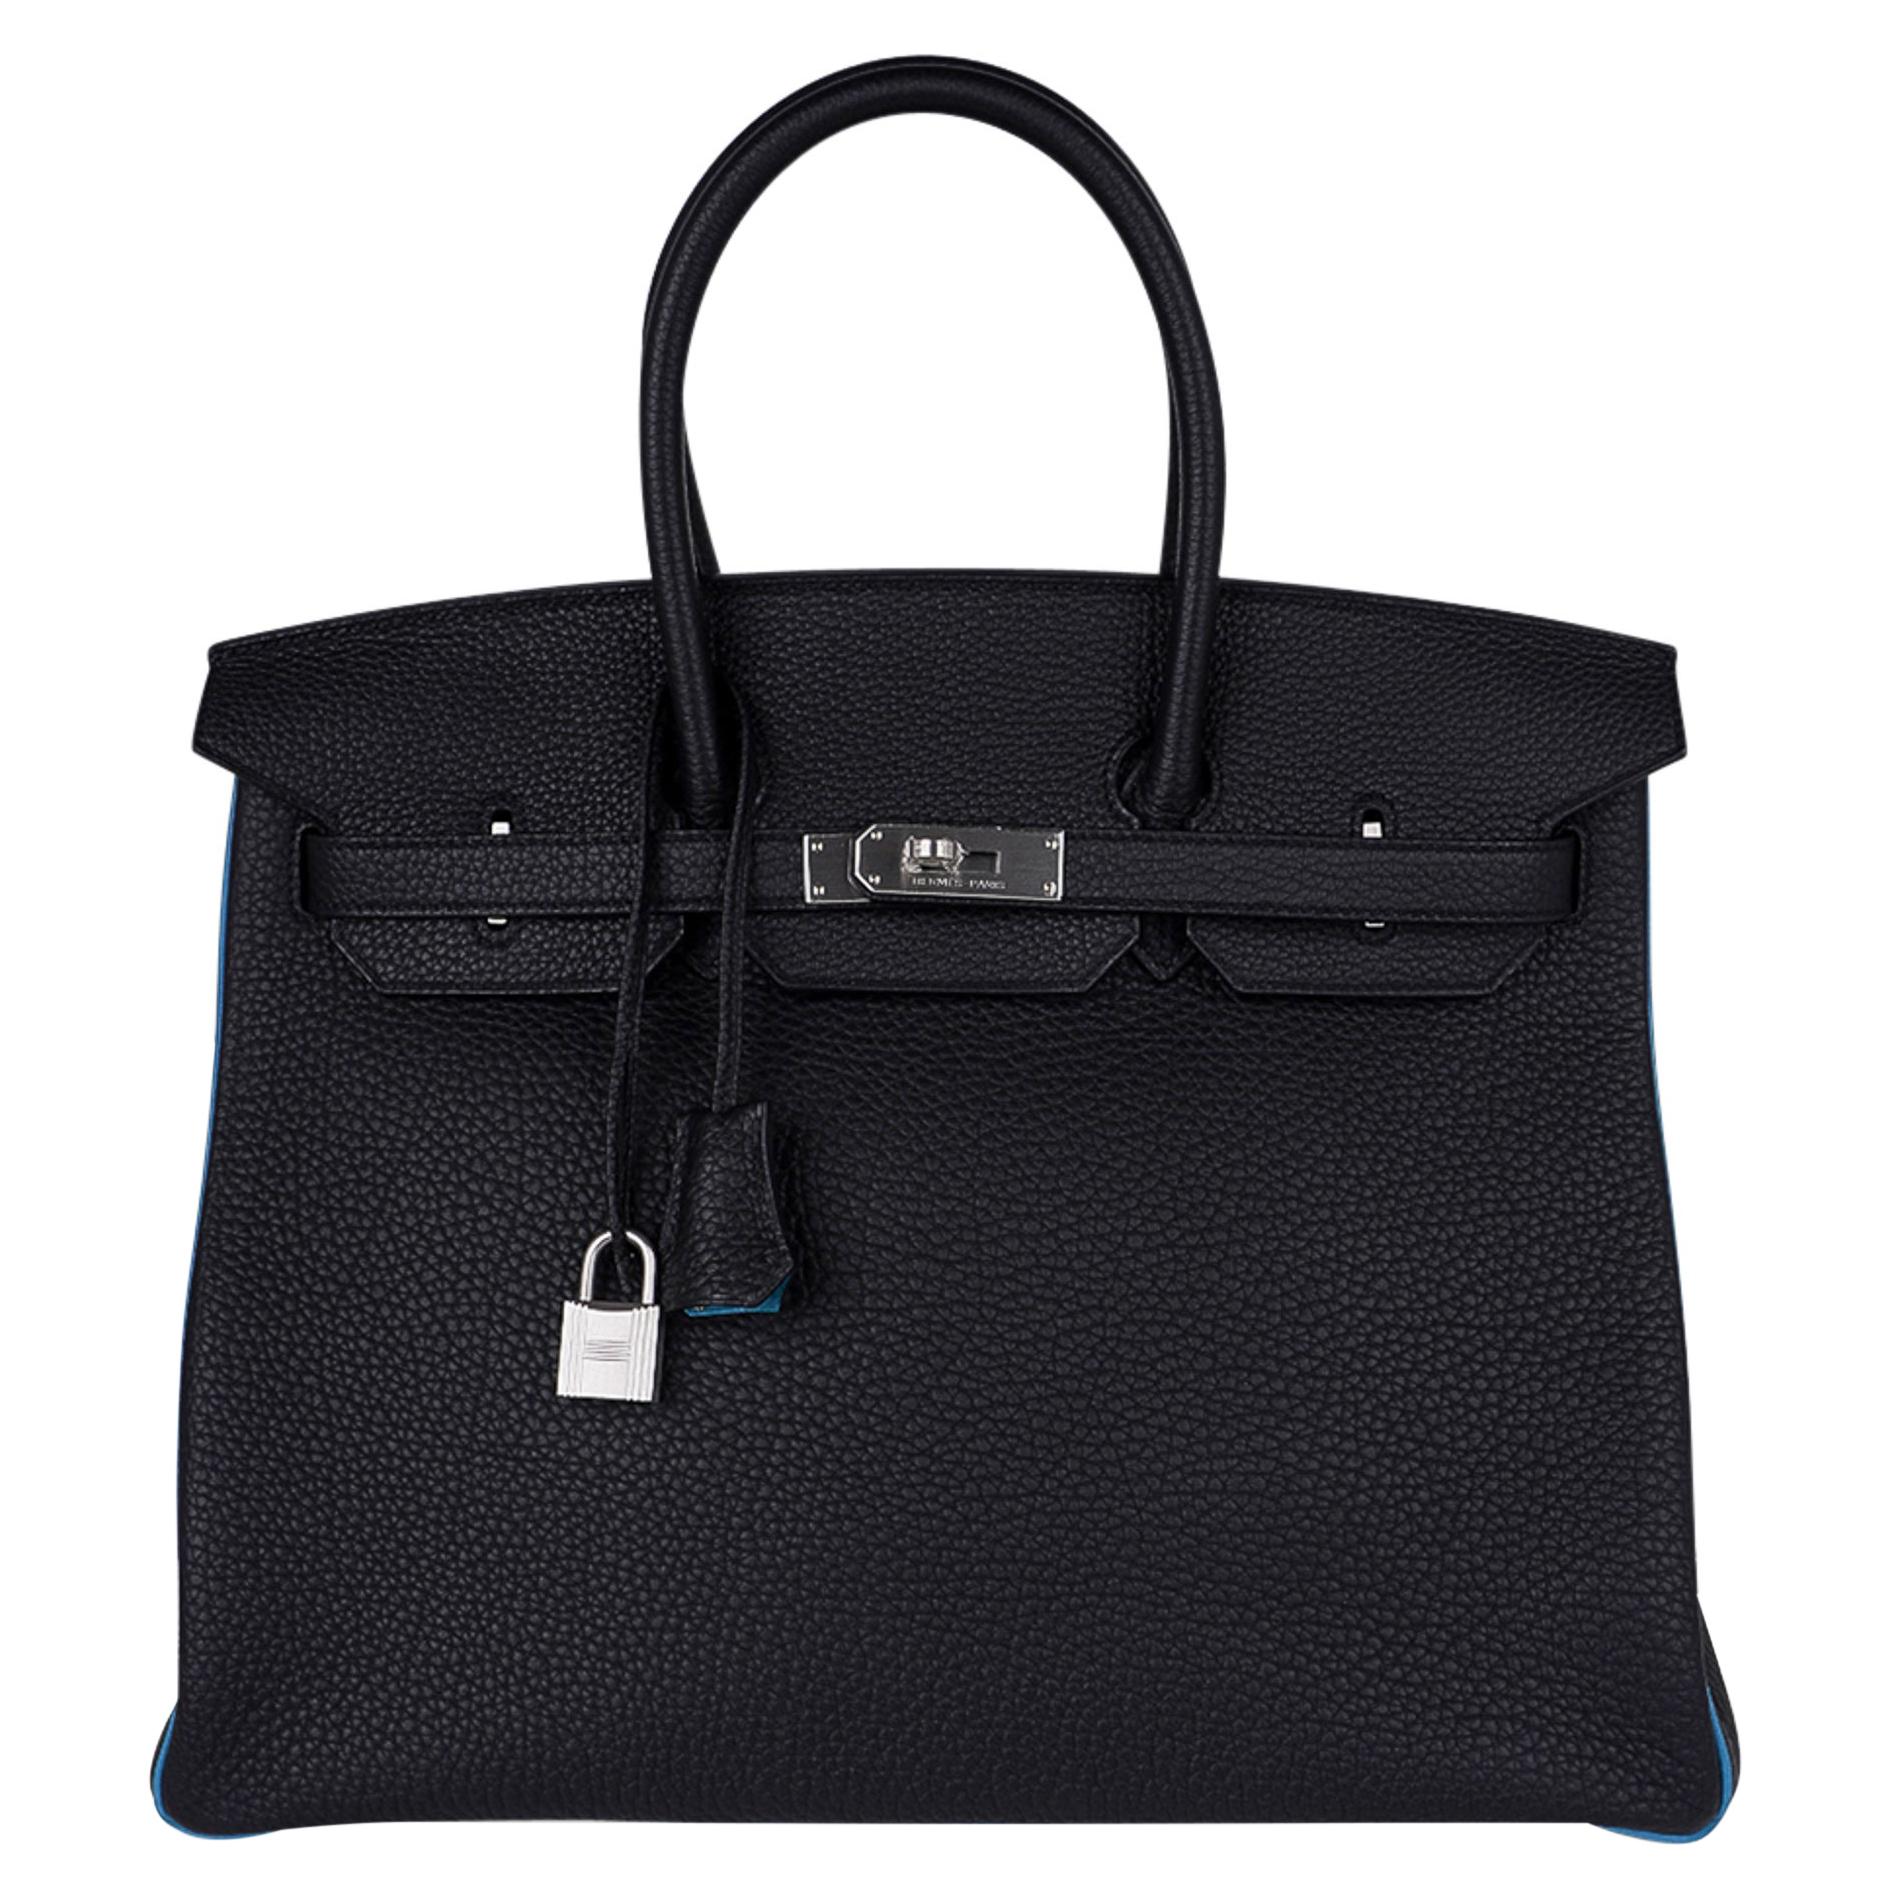 Hermes Birkin HSS 35 Black / Turquoise Bag Brushed Palladium Togo Leather